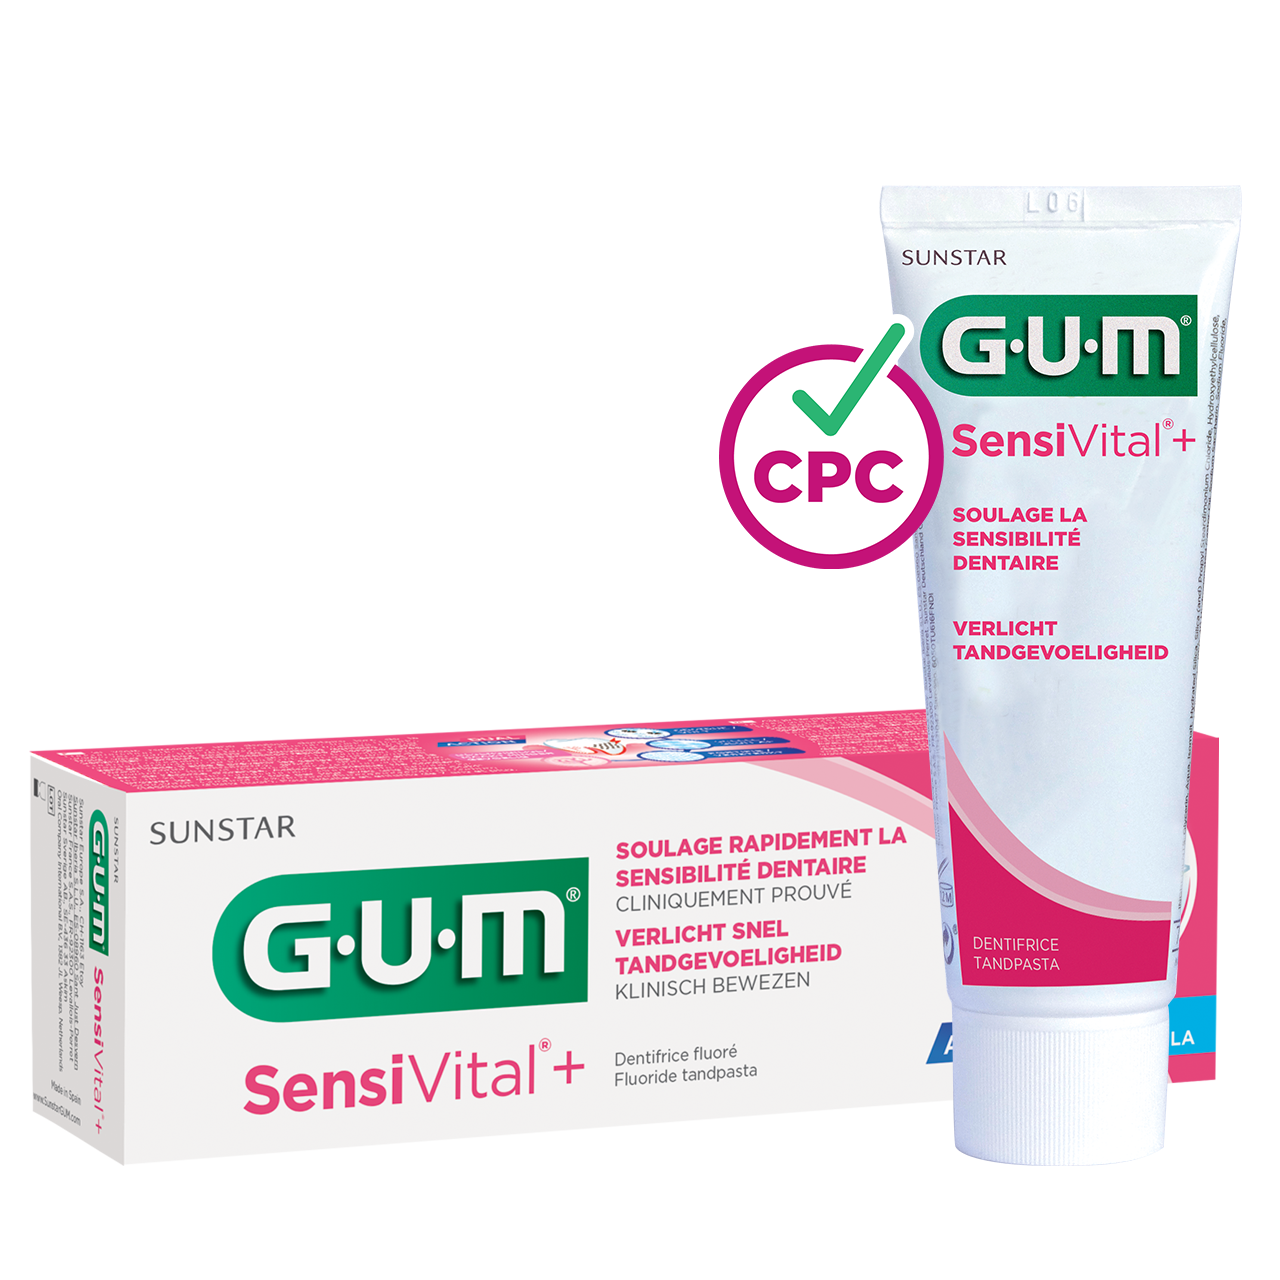 P6070-FR-NL-GUM-SensiVital-plus-Toothpaste-75ml-Box-Tube-CPC.png